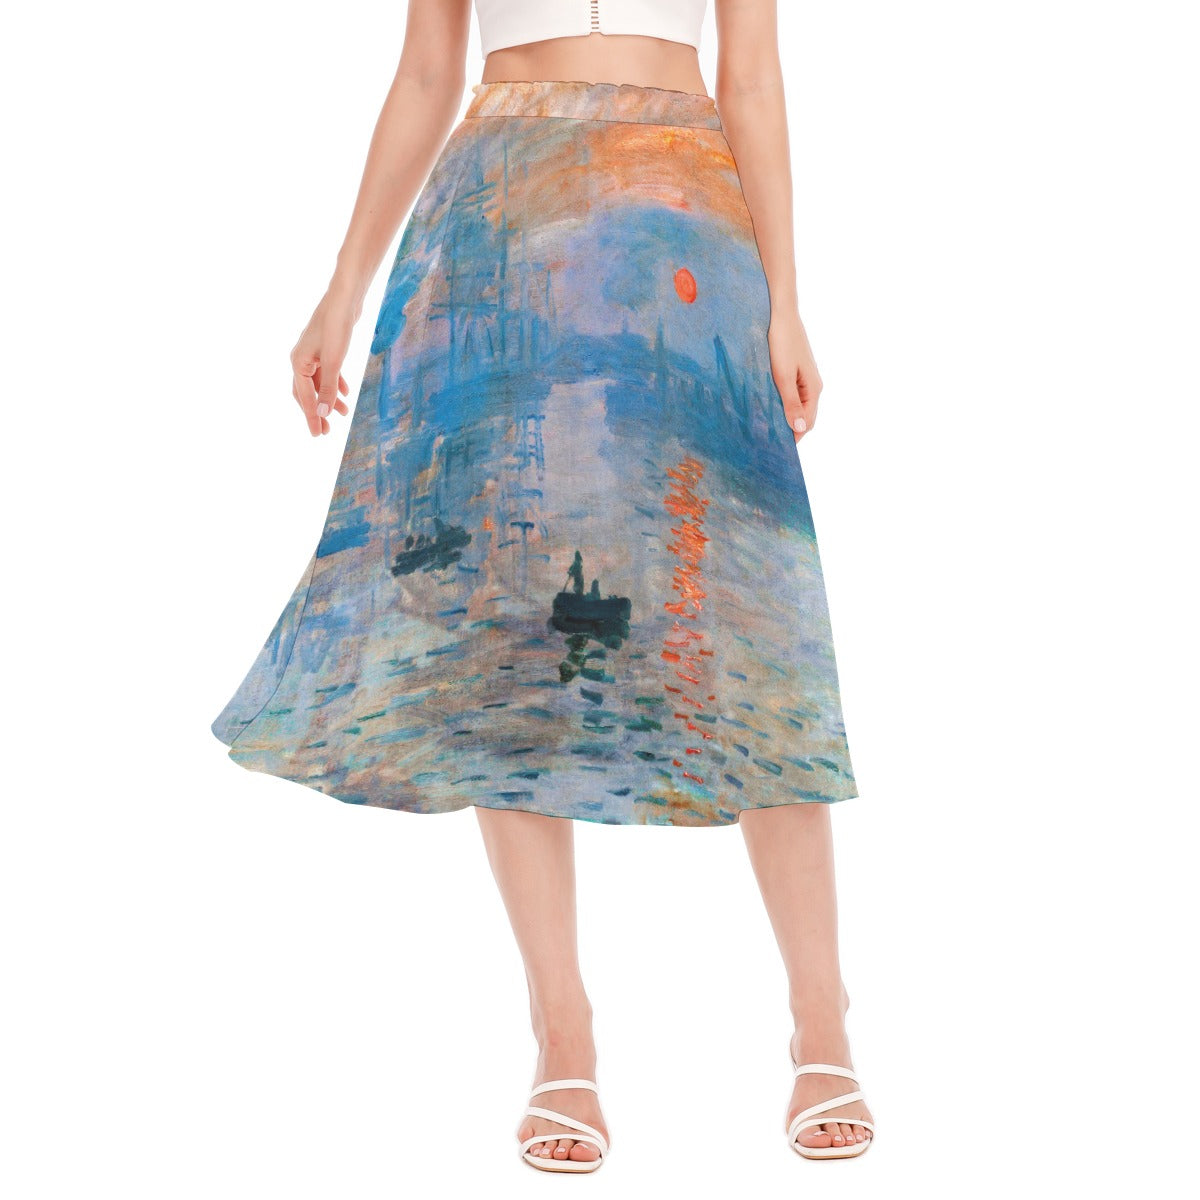 Ethereal chiffon skirt featuring Impression Sunrise motif